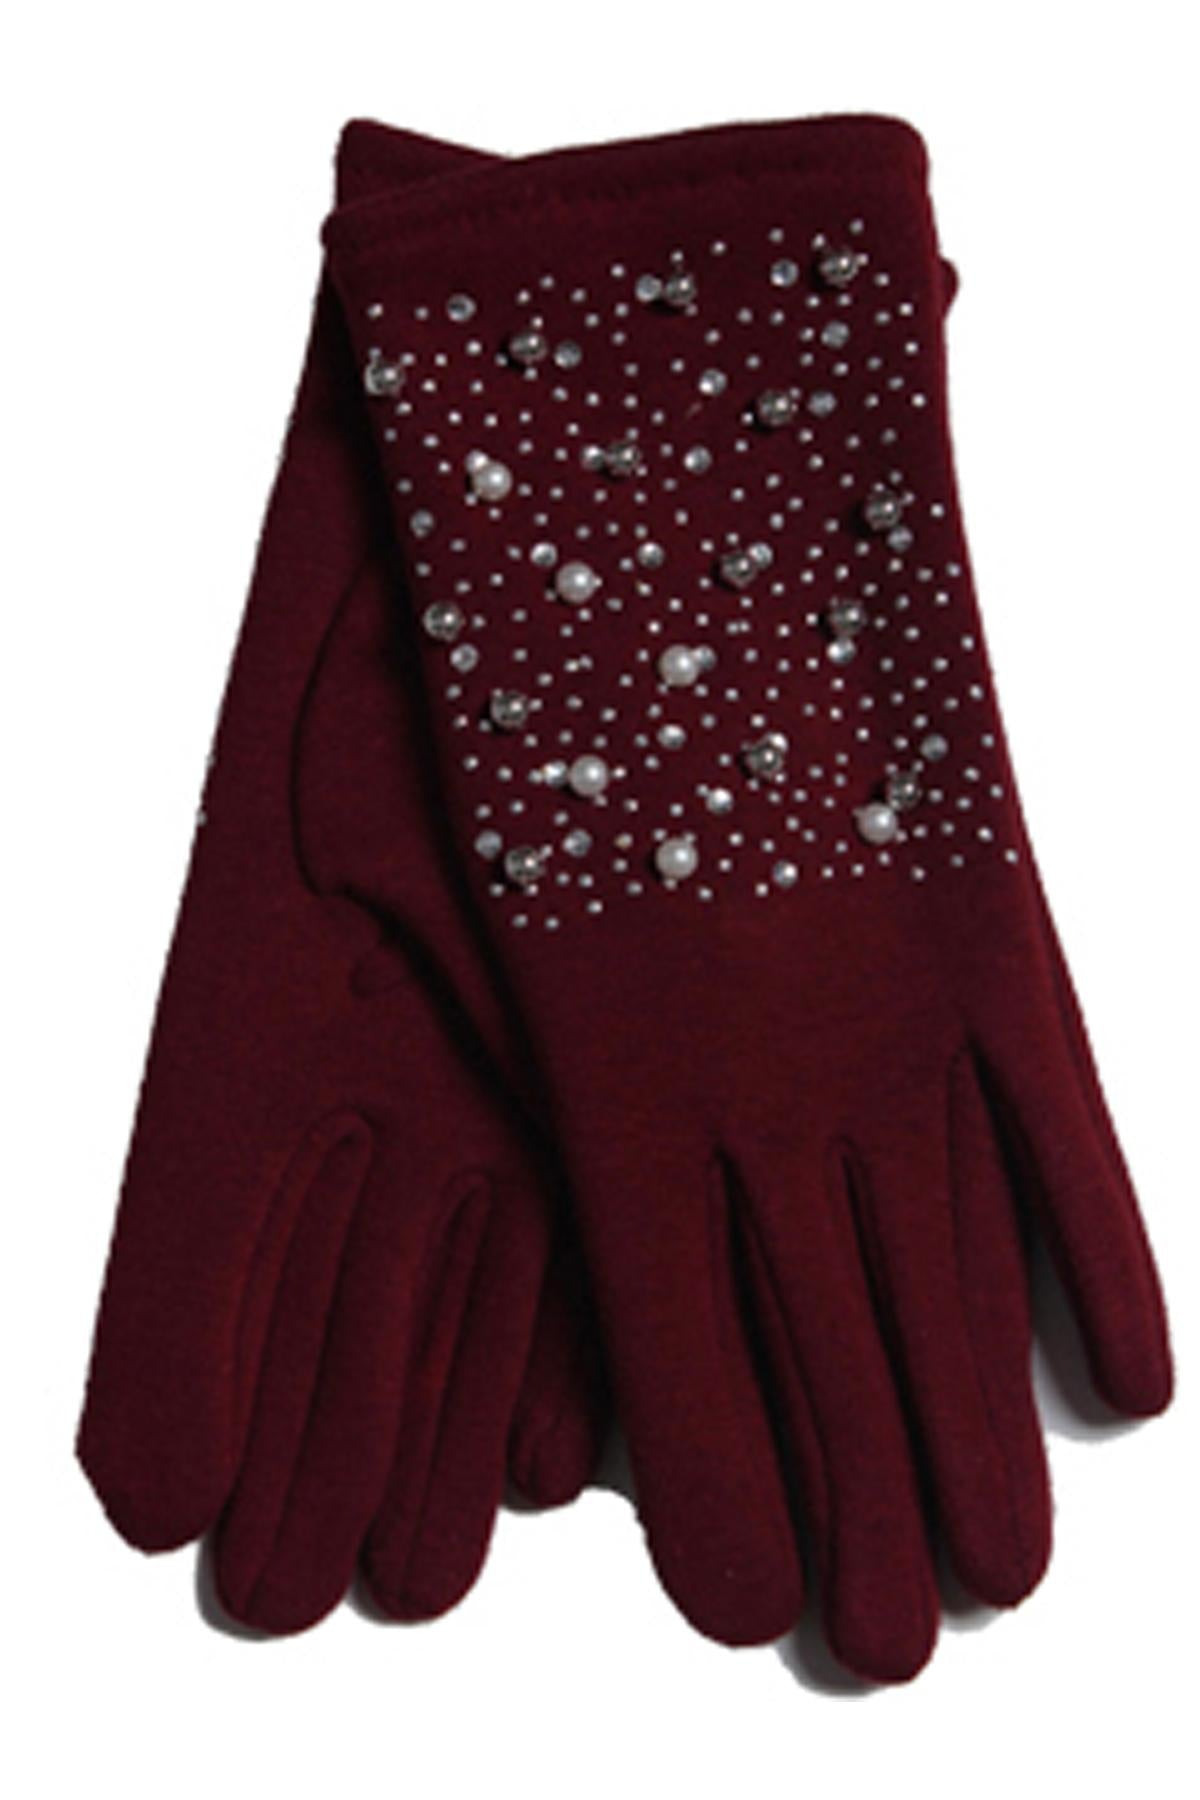 Kaya embellished burgundy gloves LAST PAIR